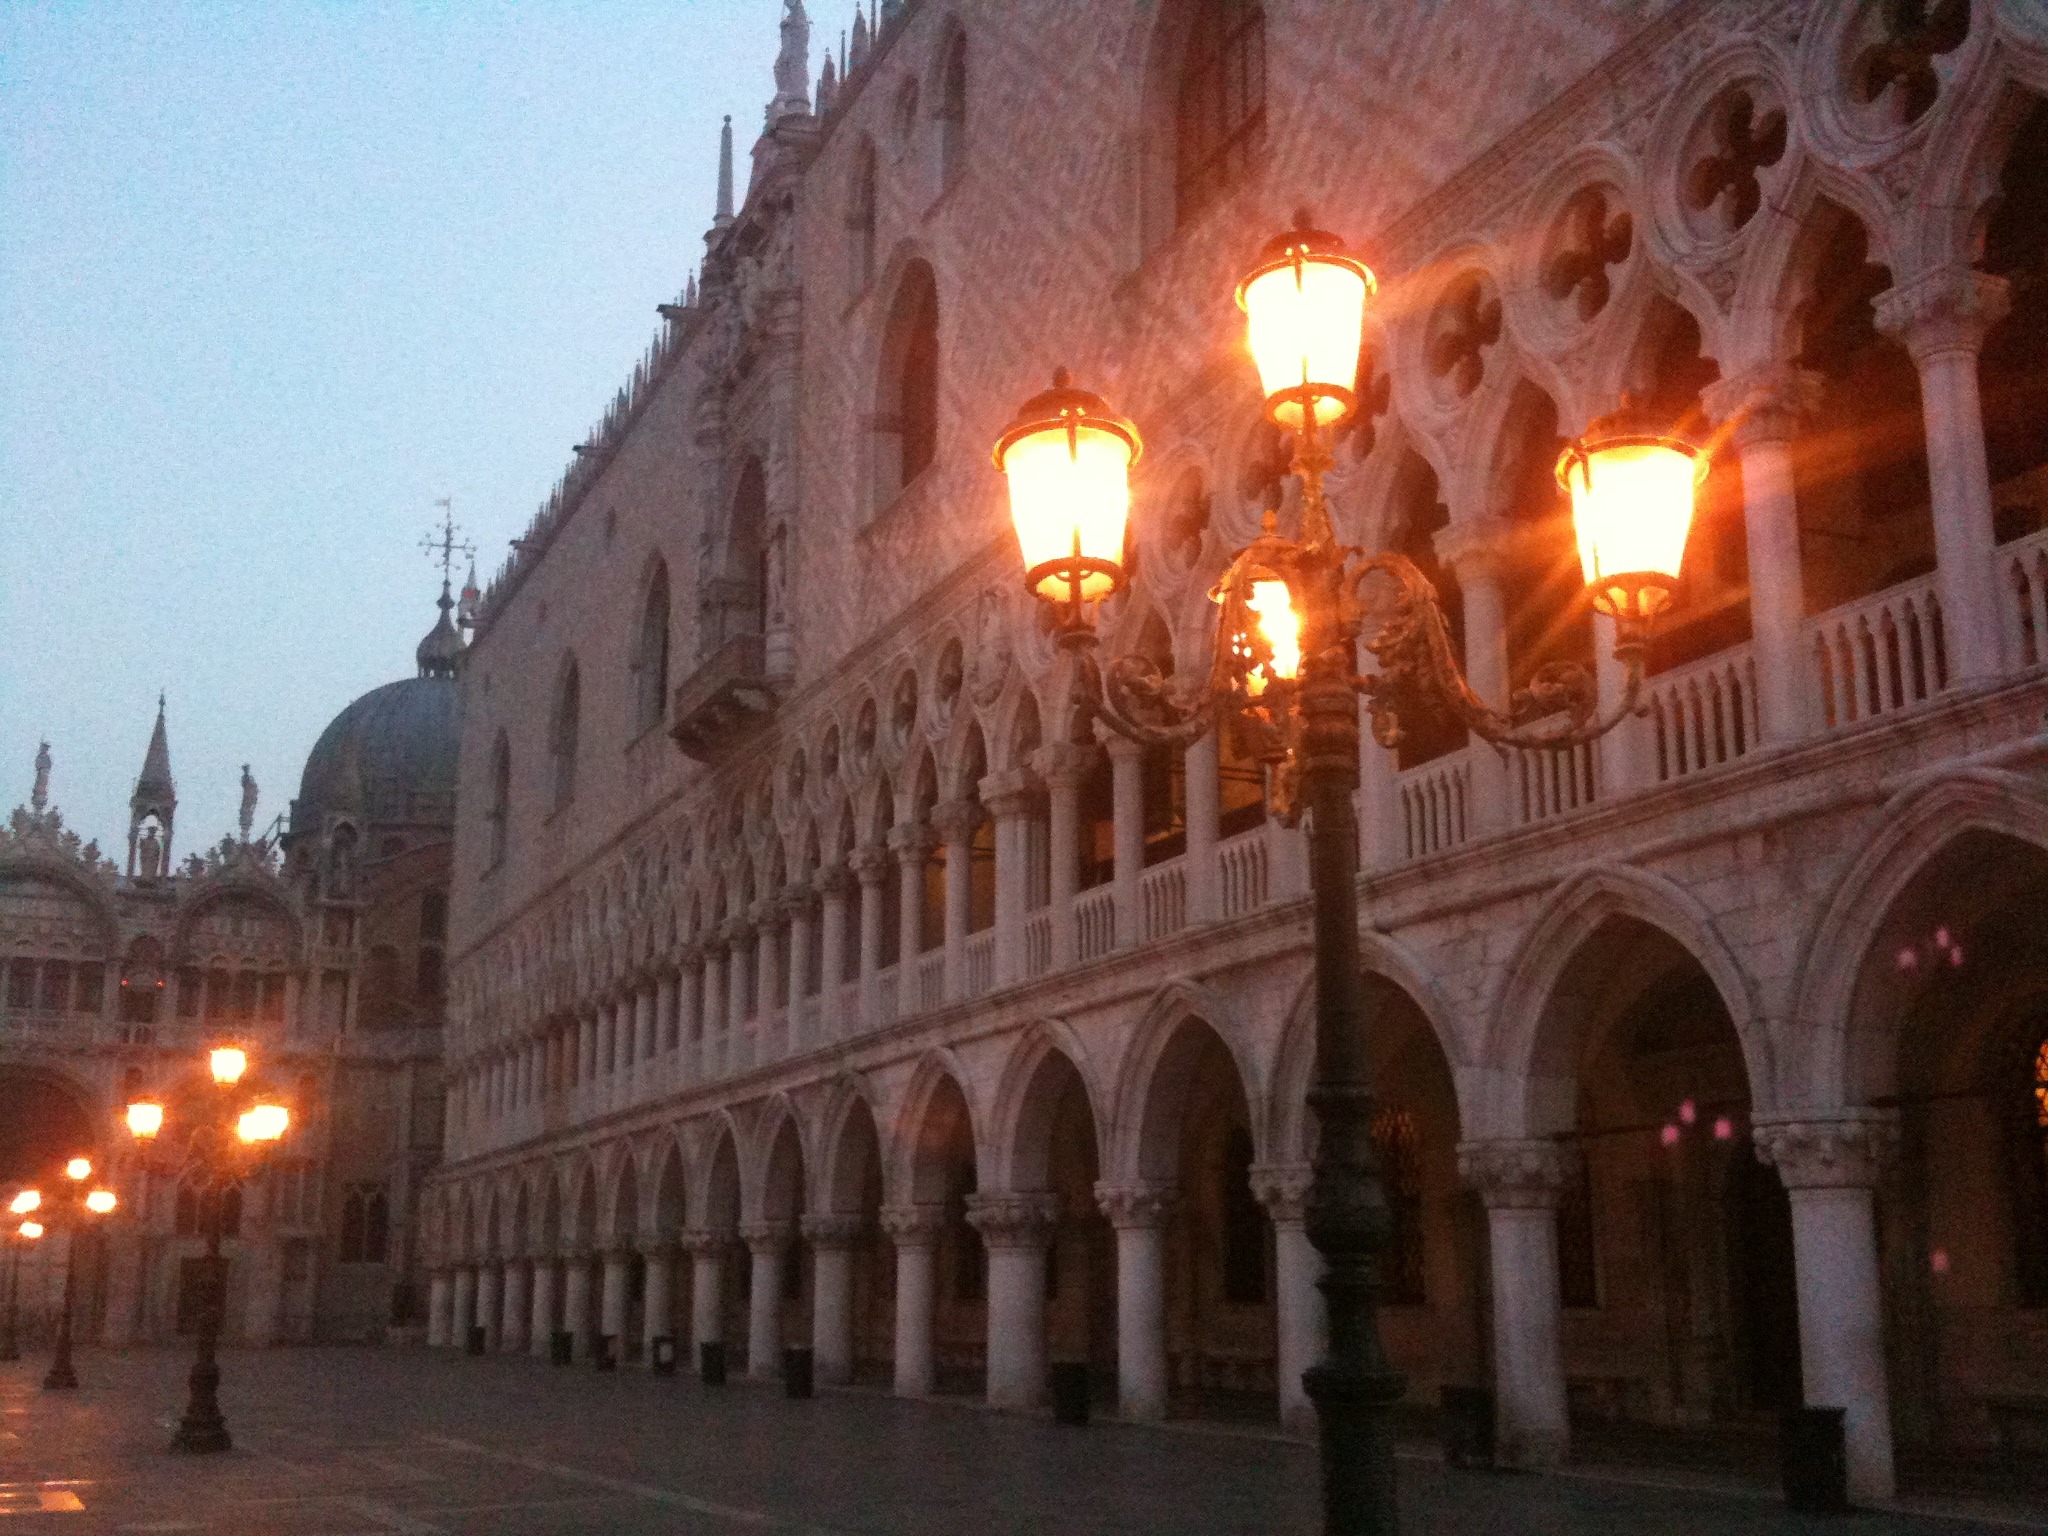 Venice at Daybreak - Mobile Photos - Day 6